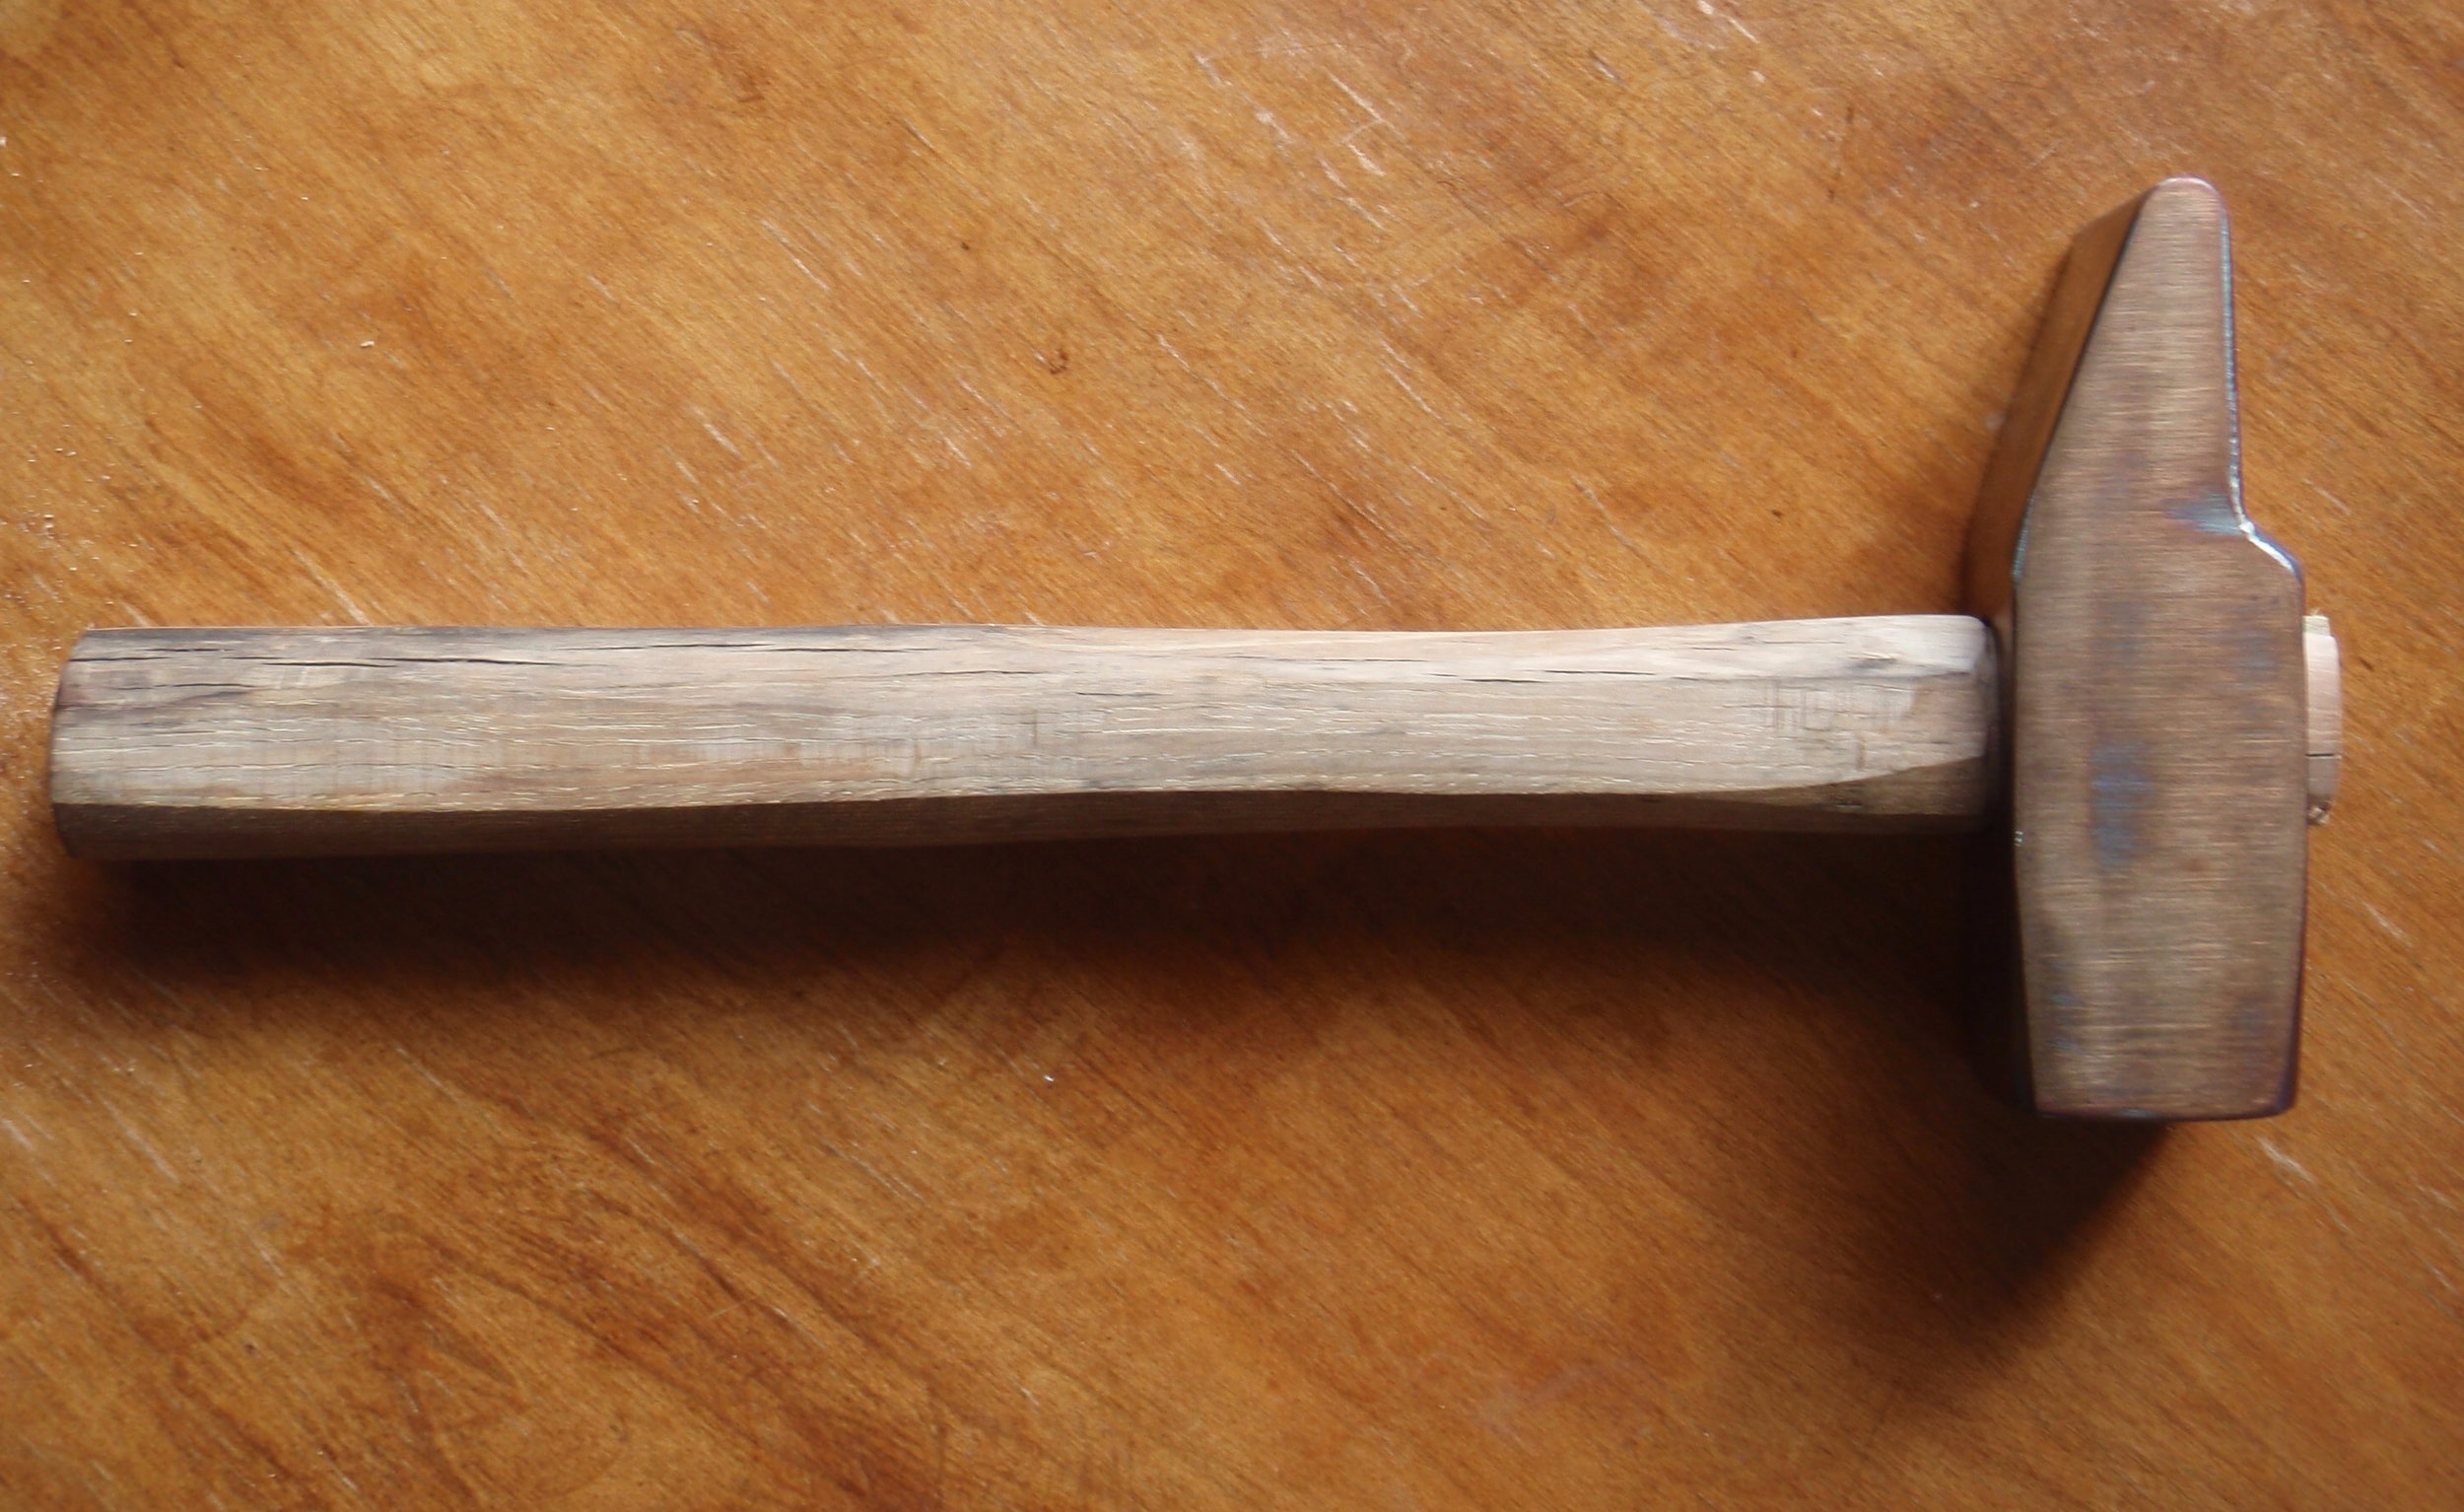 A blacksmith's hammer